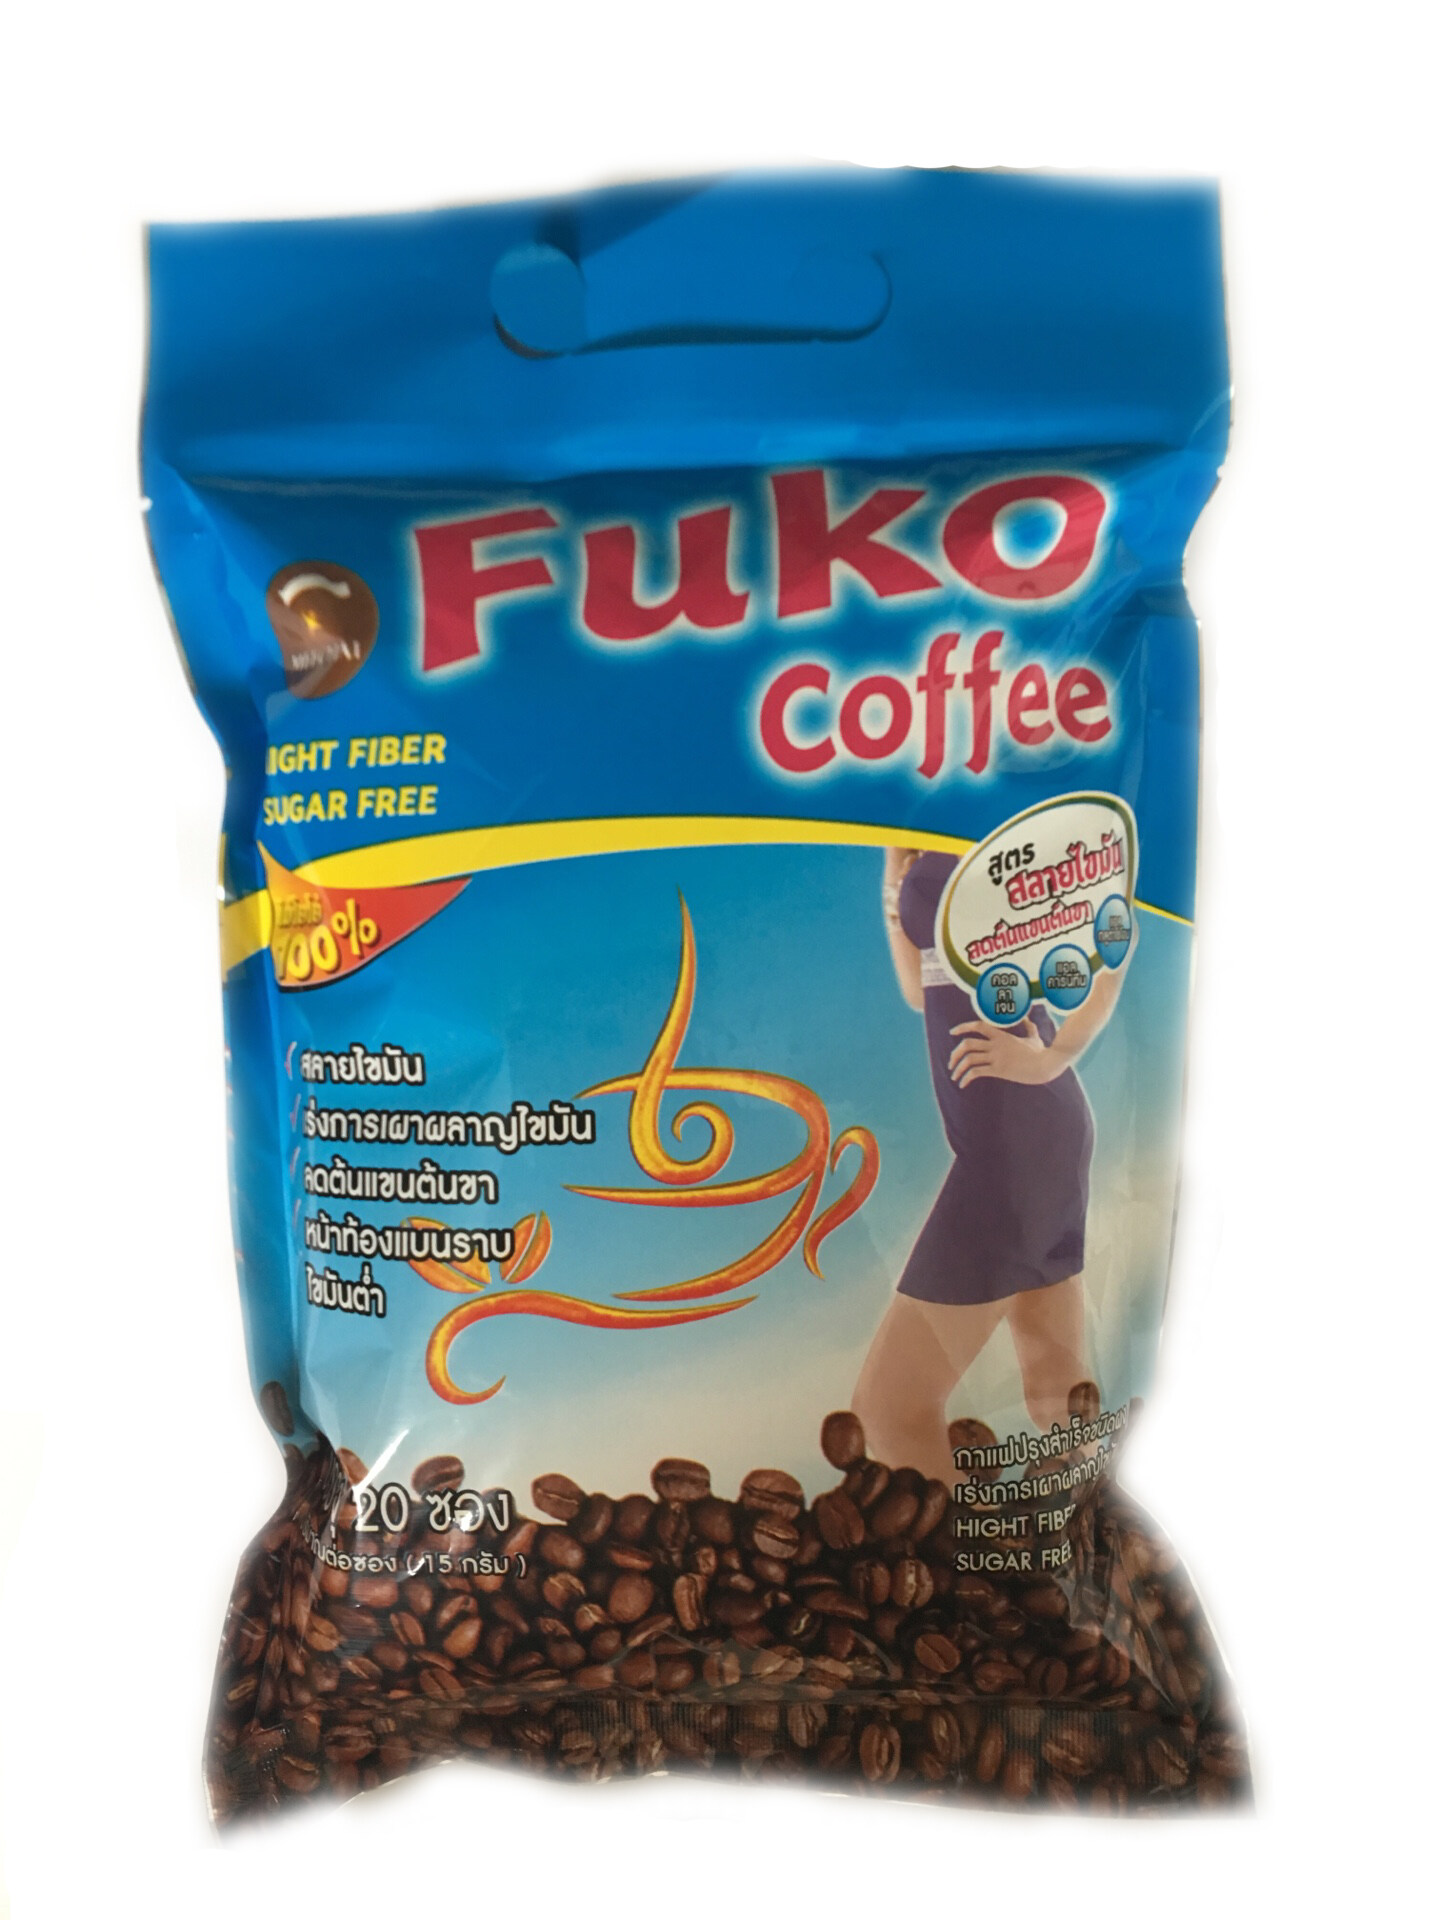 Fuko Coffee กาแฟฟูโกะ กาแฟลดน้ำหนัก (1 ห่อ 20 ซอง)